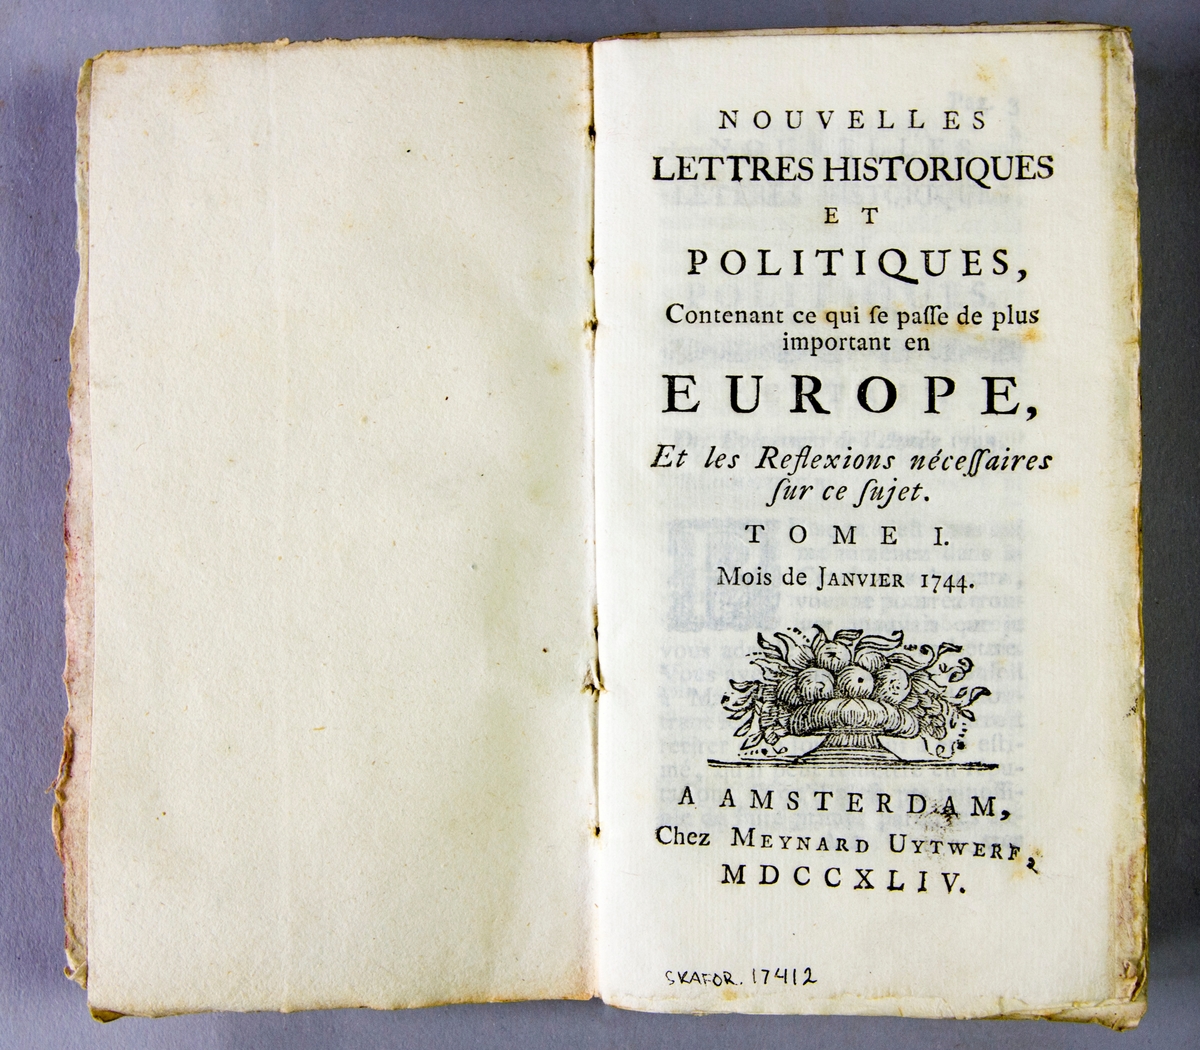 Bok, pappband, "Nouvelles lettres historiques et politiques", del 1, tryckt 1744 i Amsterdam. Pärmar av marmorerat papper, blekt rygg med påklistrade etiketter med titel och samlingsnummer. Oskuret snitt, ouppskuren.